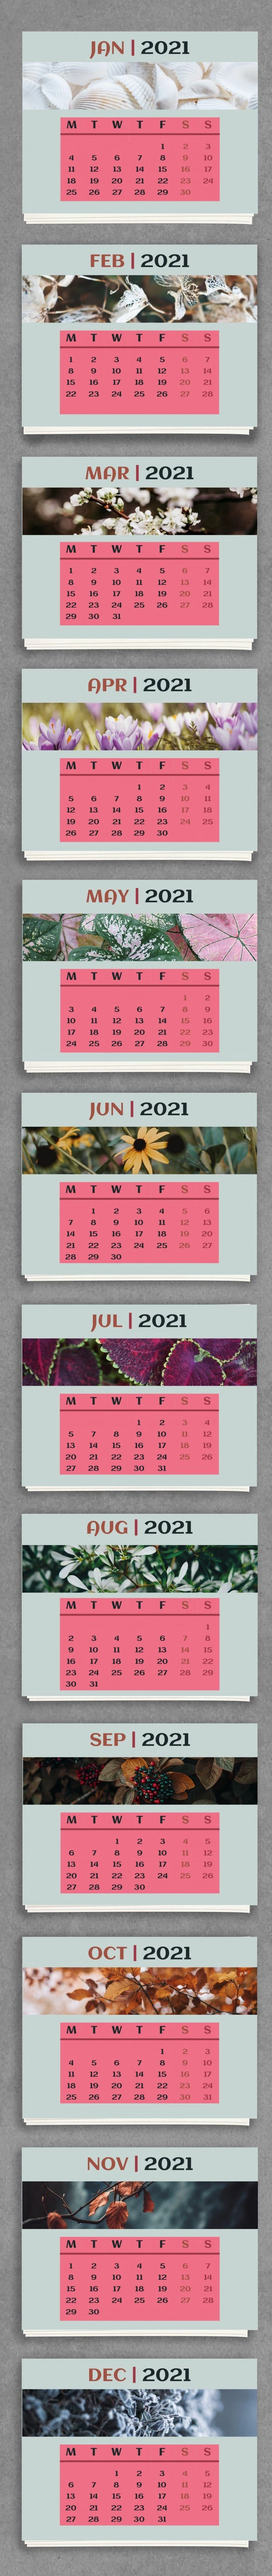 Bellissimo calendario mensile 2021 - free Google Docs Template - 10061561